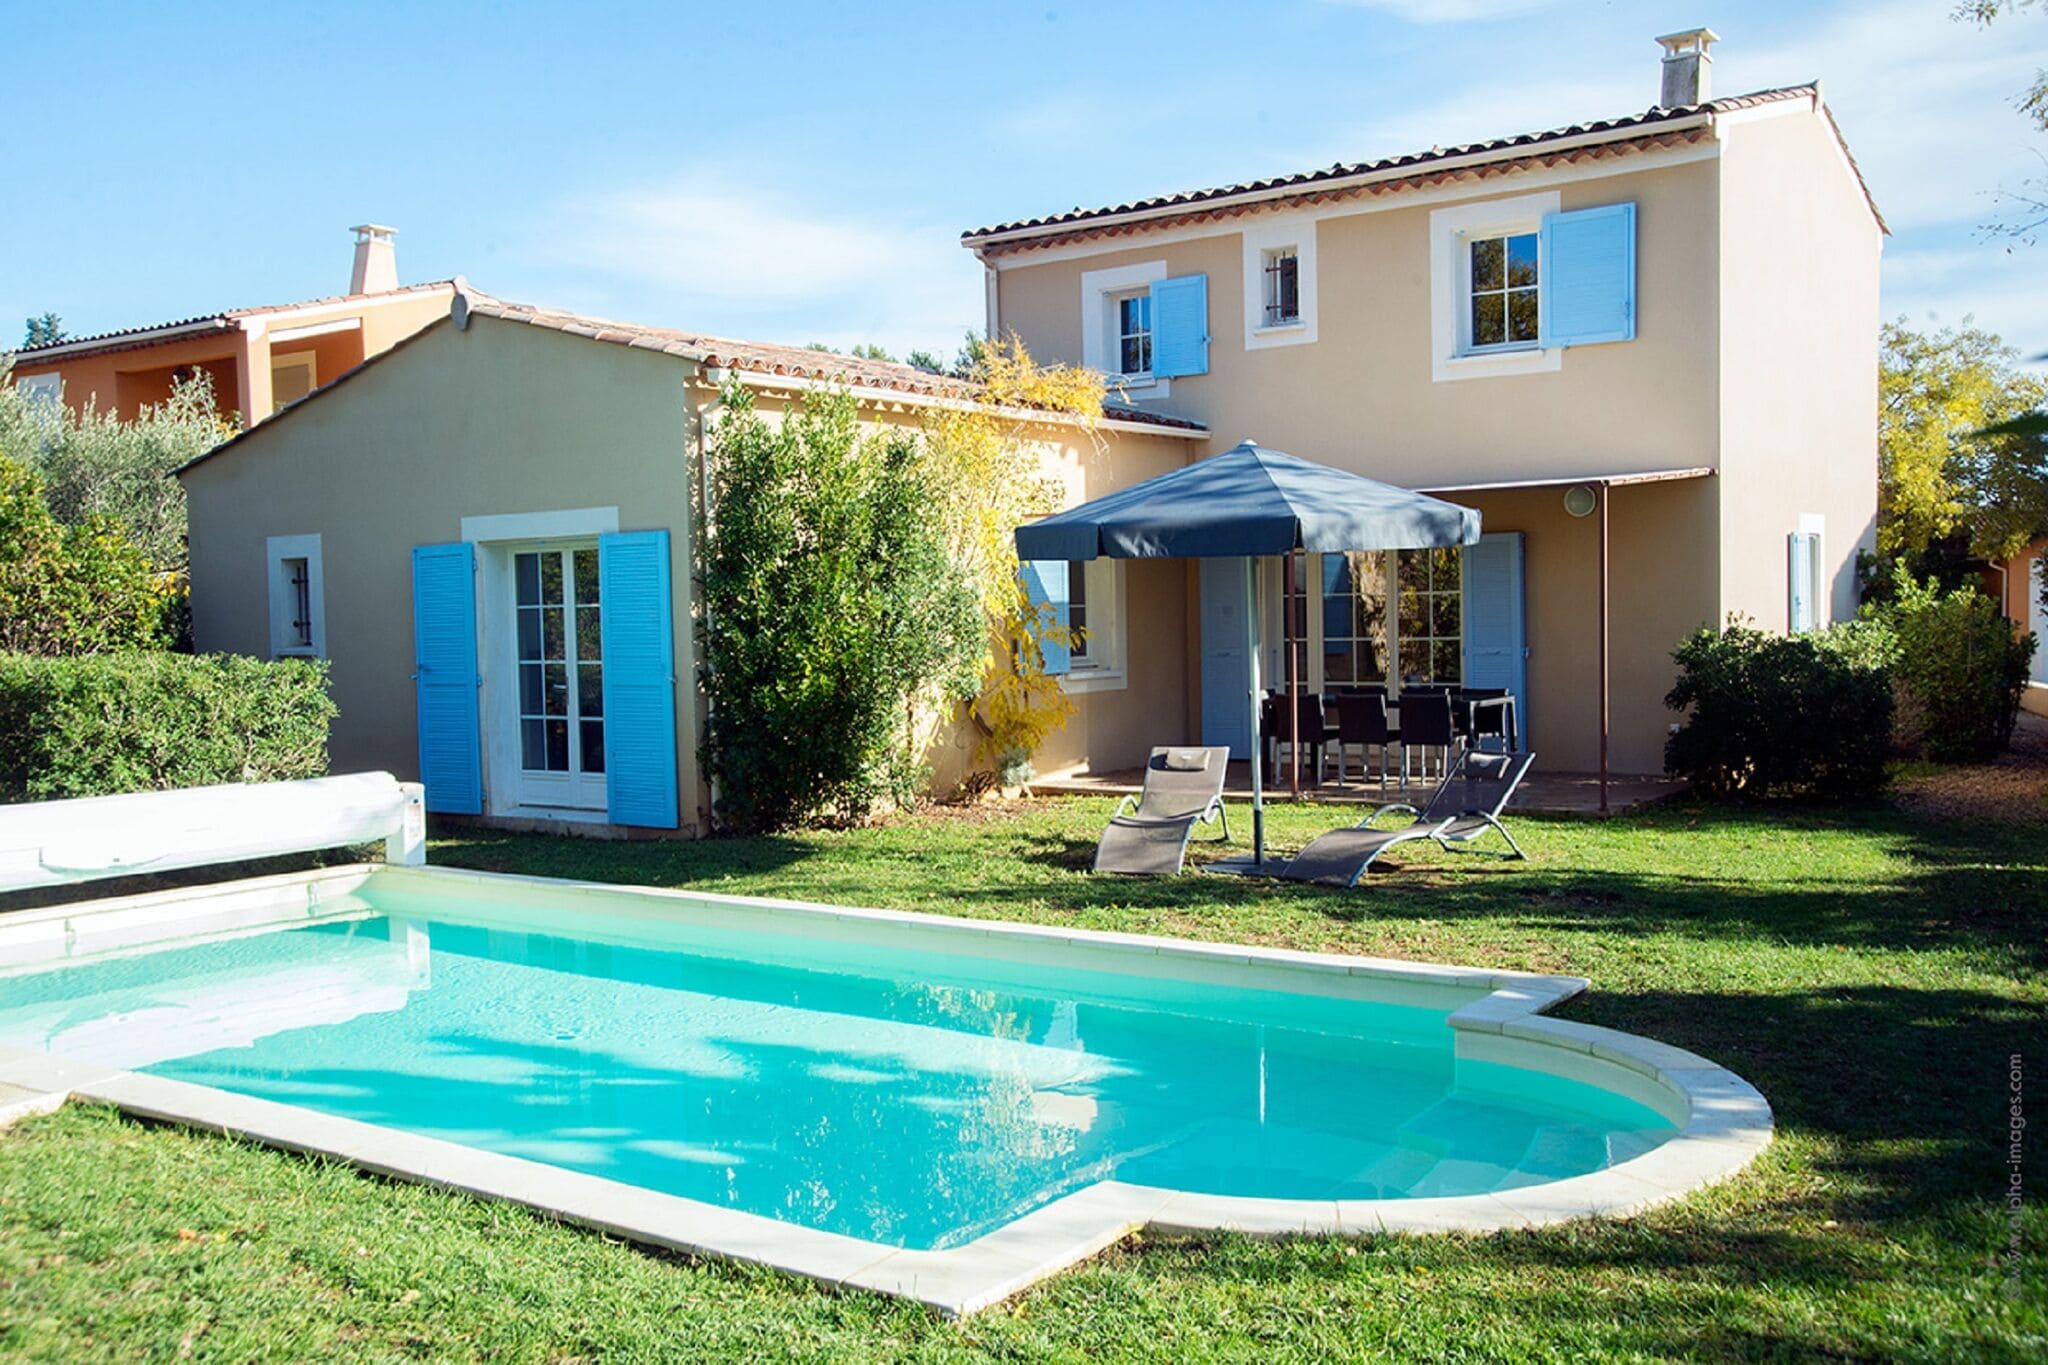 Luxurious Provencal villa in charming Lubéron